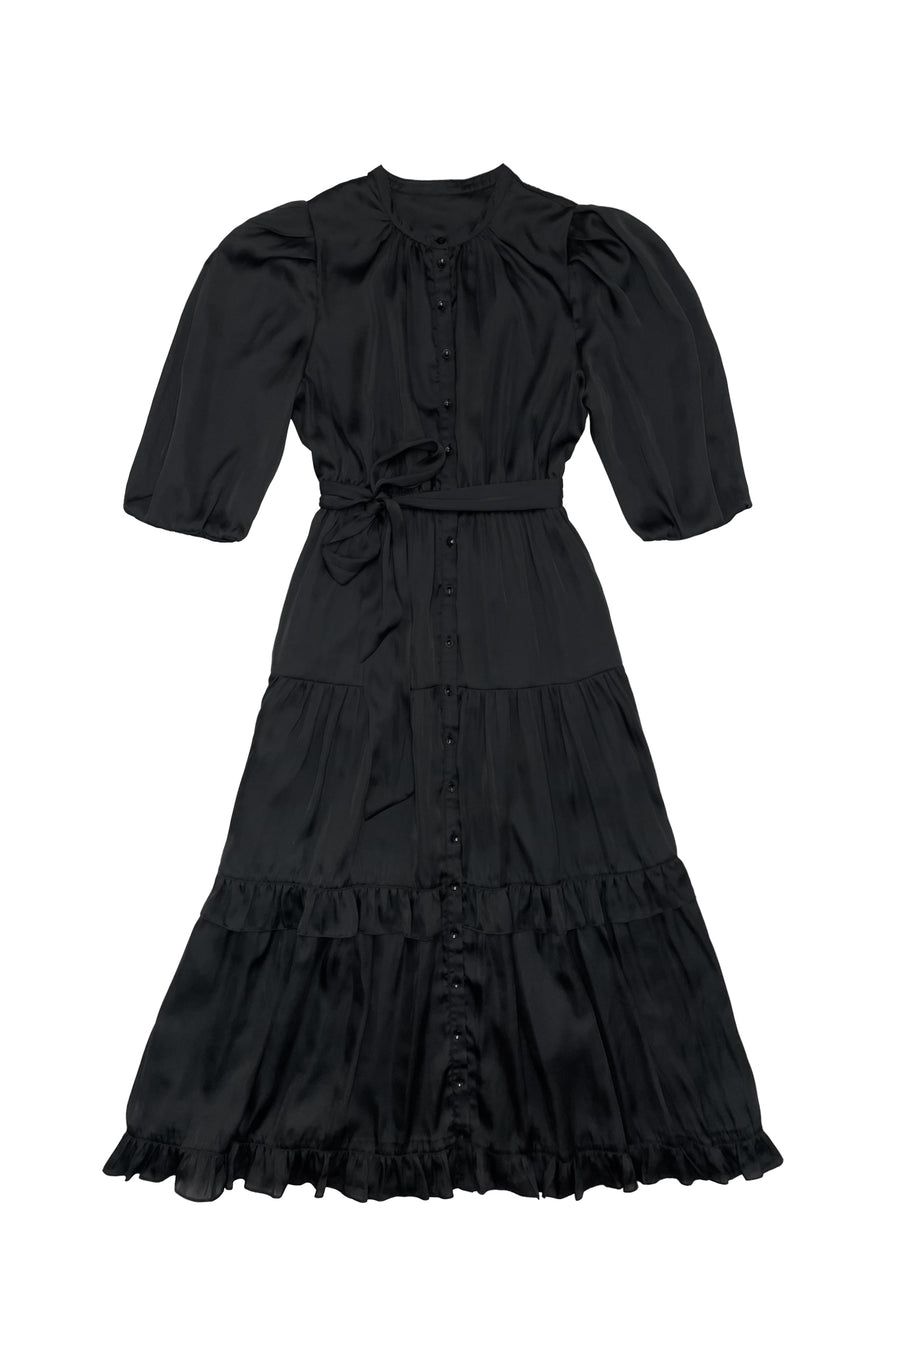 Charlotte black dress by Zaikamoya